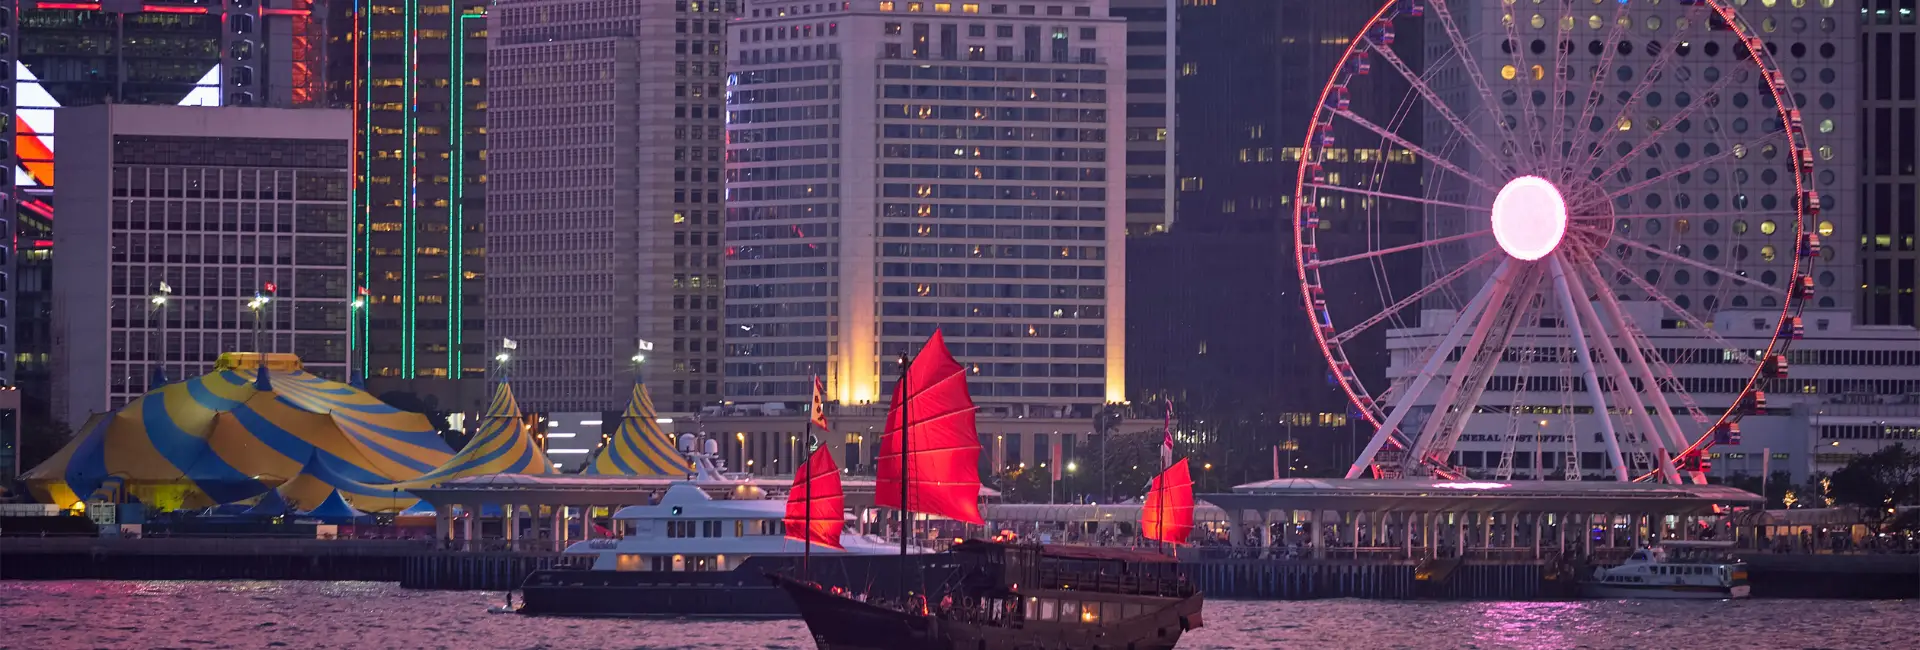 Revelion Hong Kong – Singapore